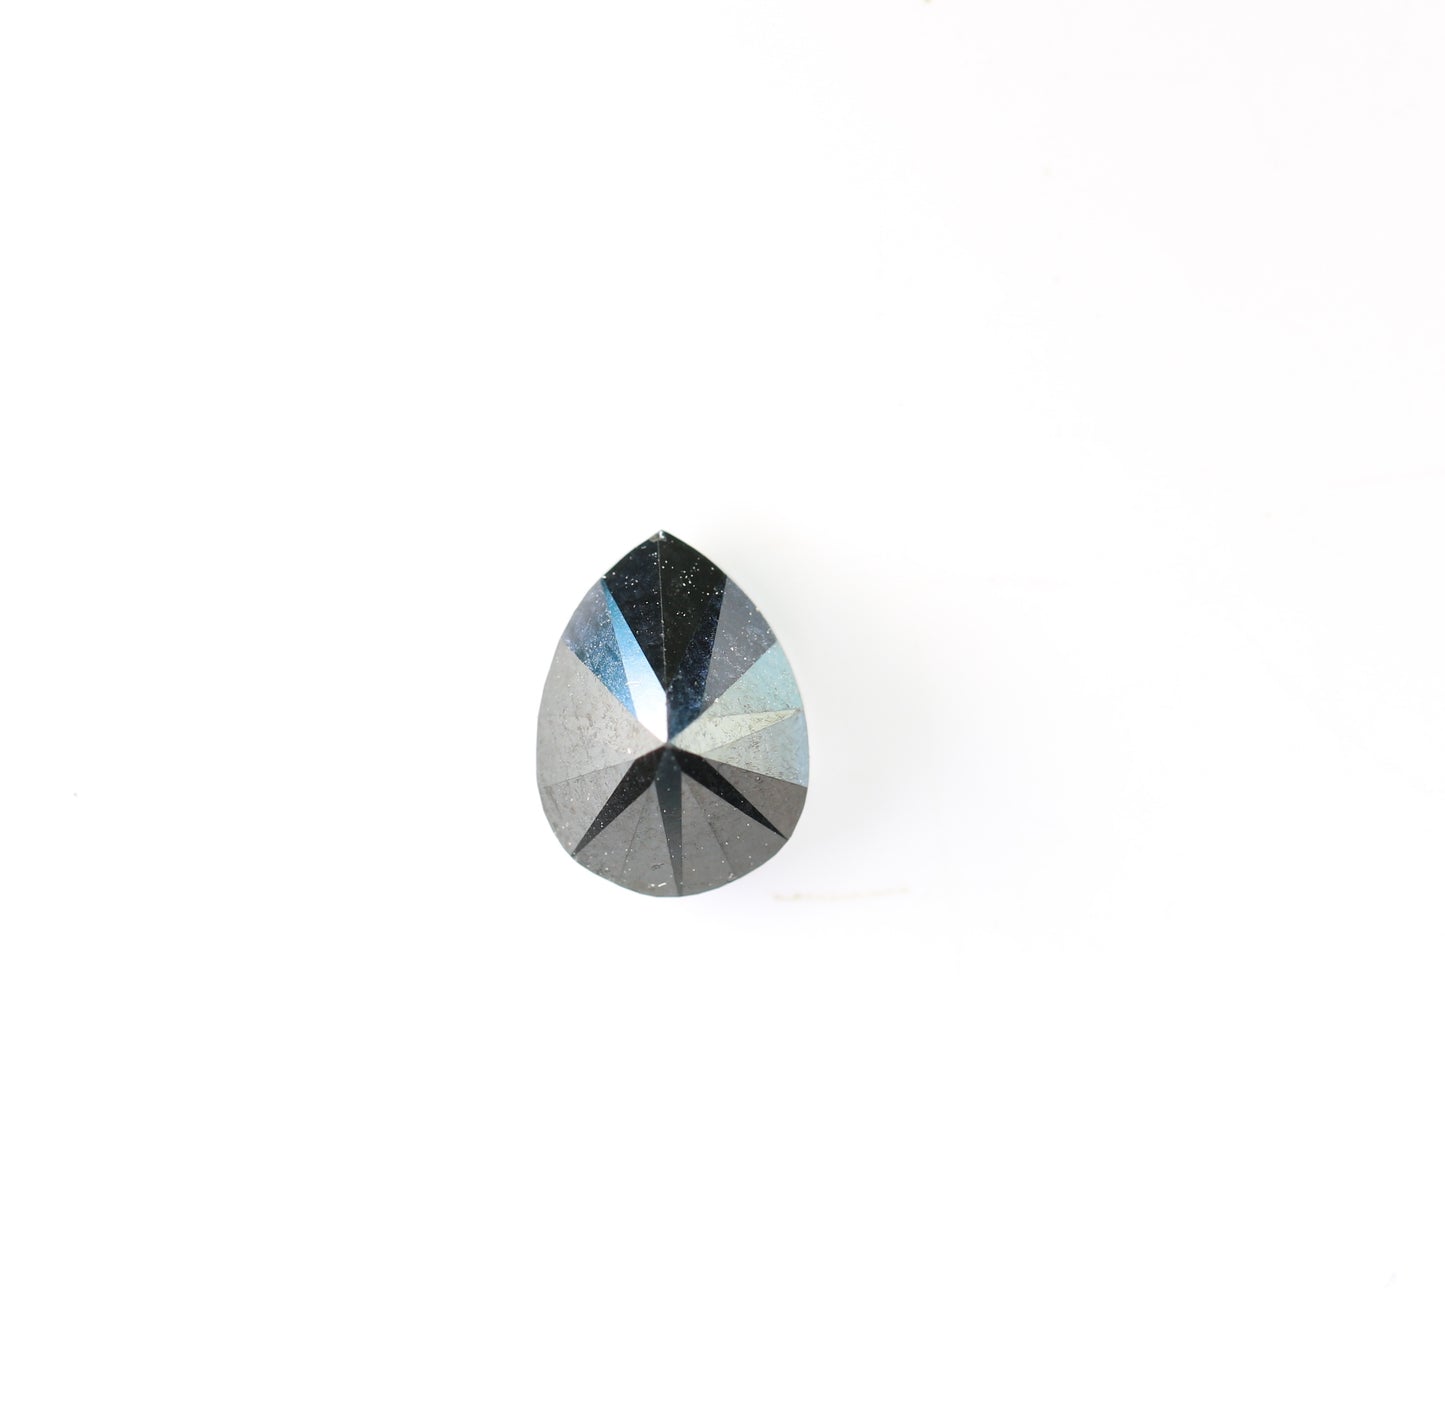 1.48 CT Fancy Black Pear Diamond For Wedding Ring